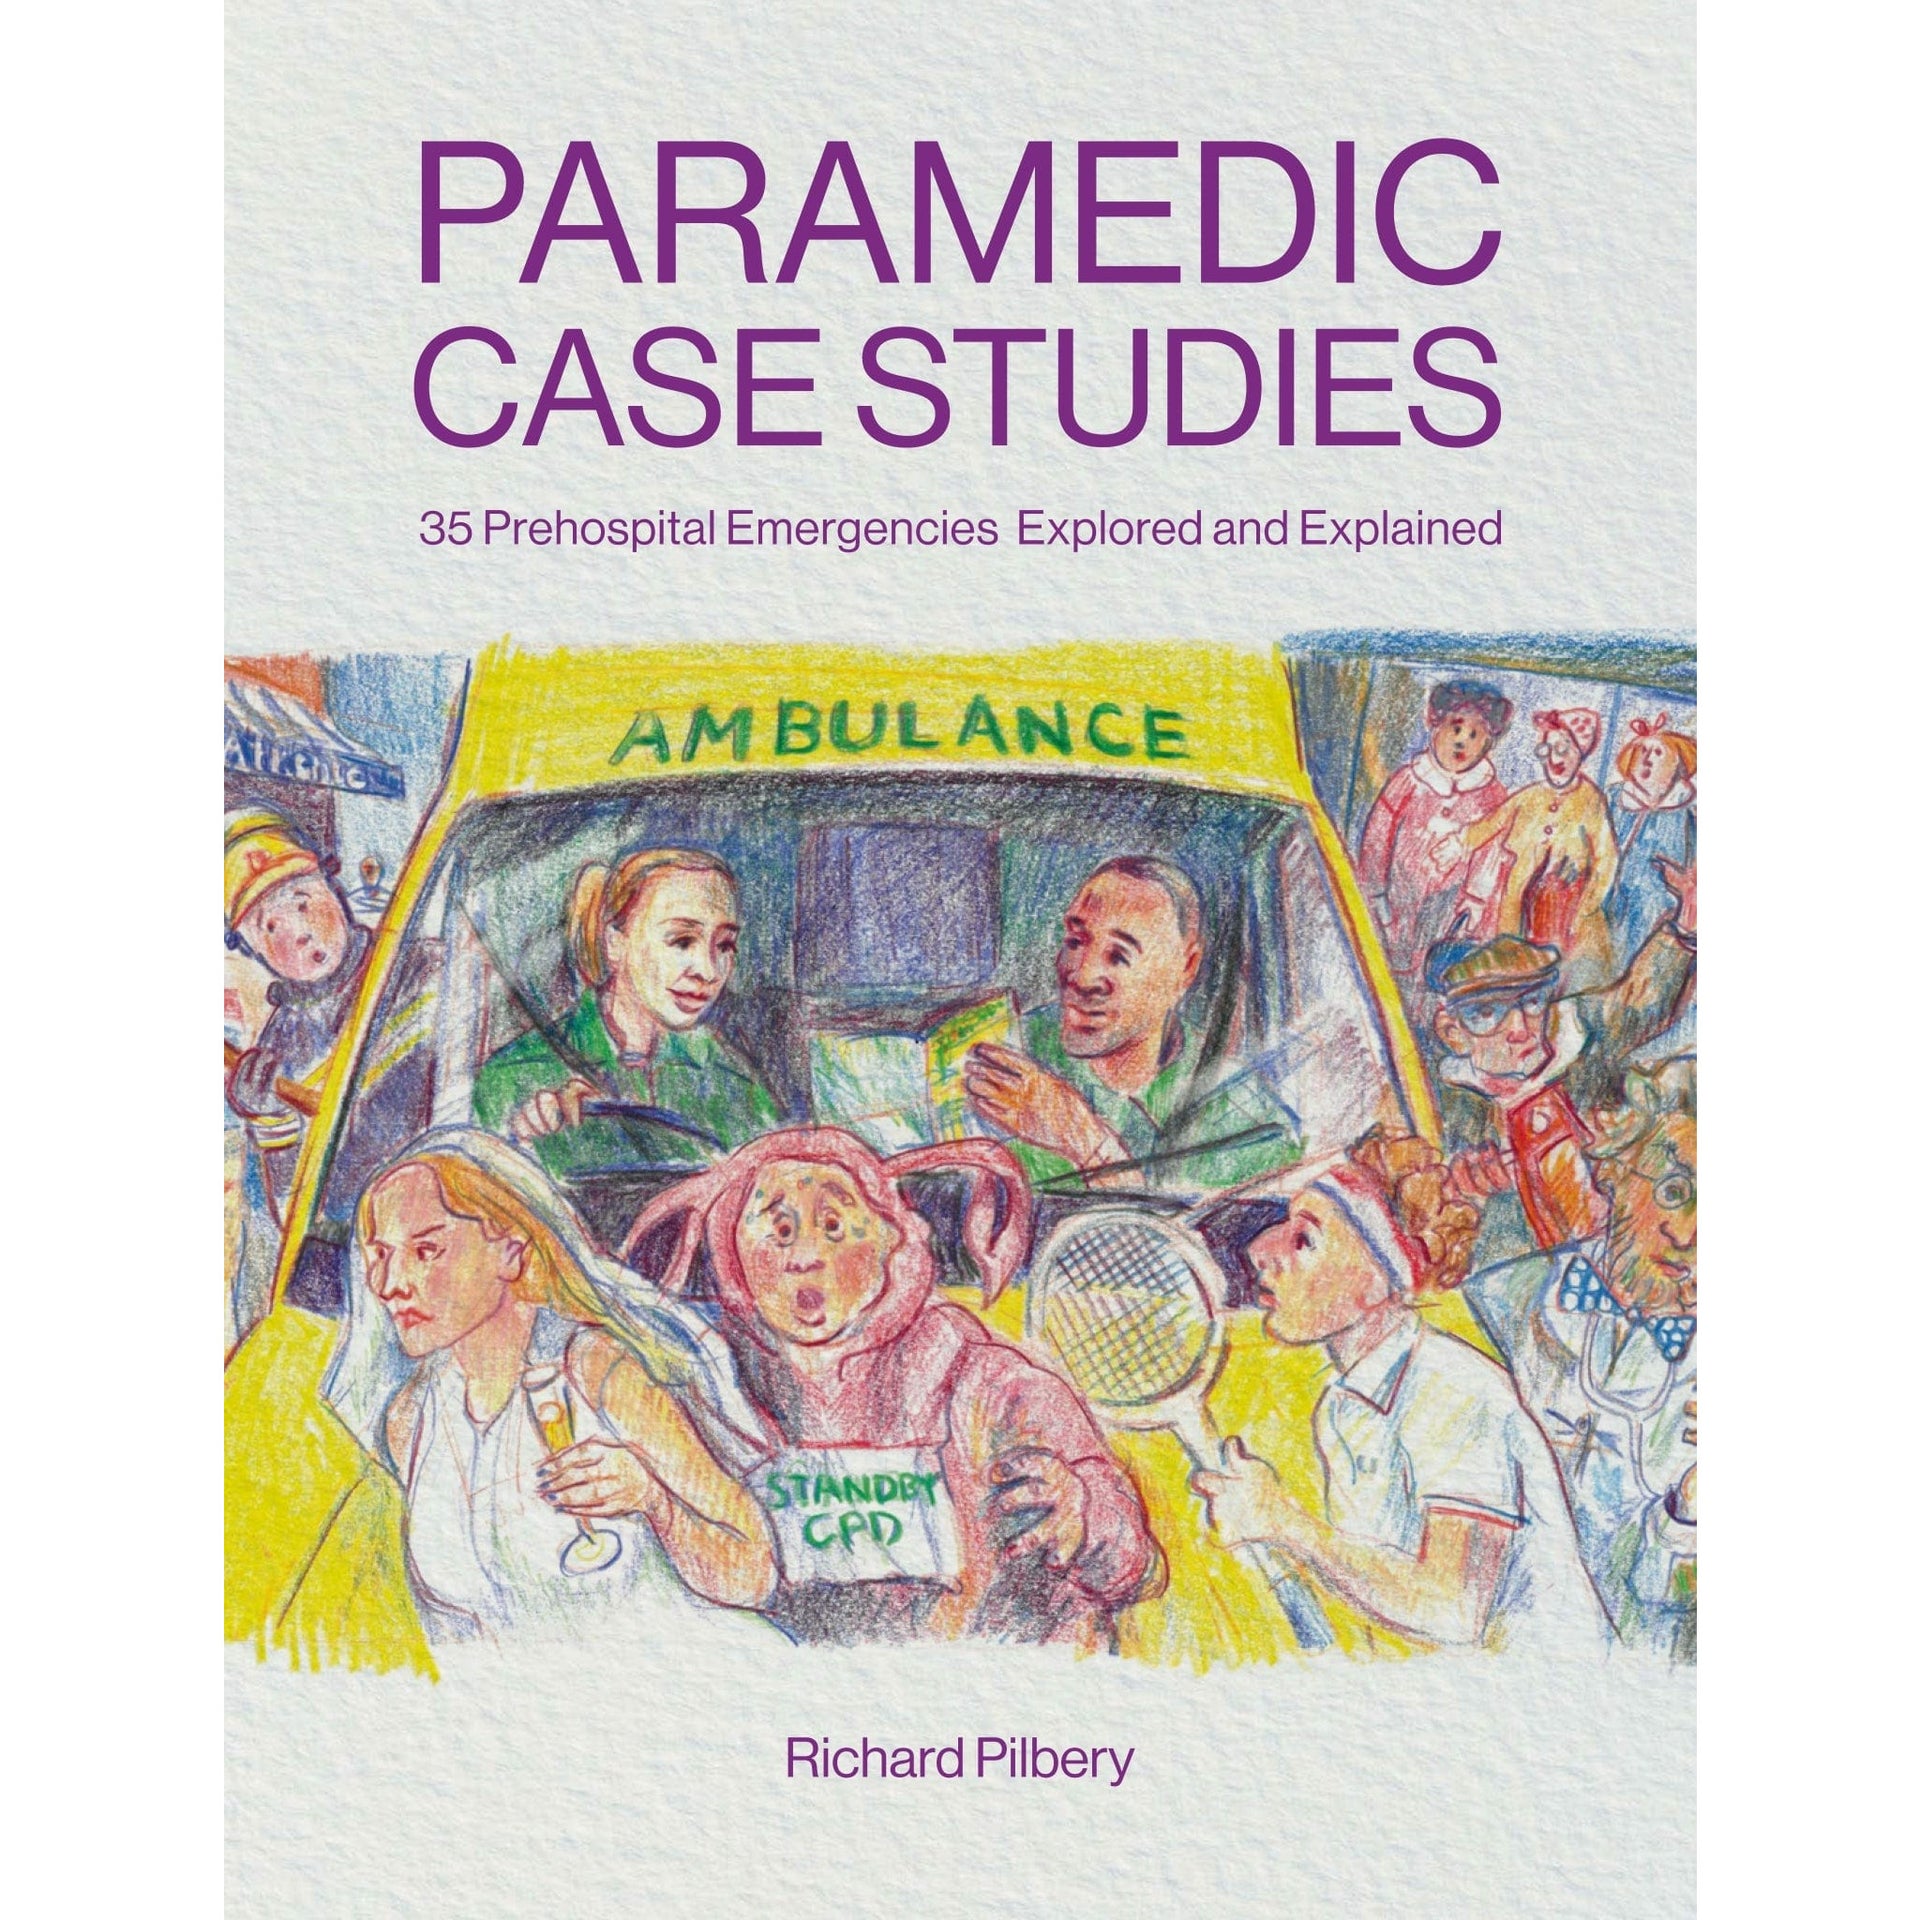 Paramedic Shop Class Publishing Textbooks Paramedic Case Studies – 35 Prehospital Emergencies Explored and Explained